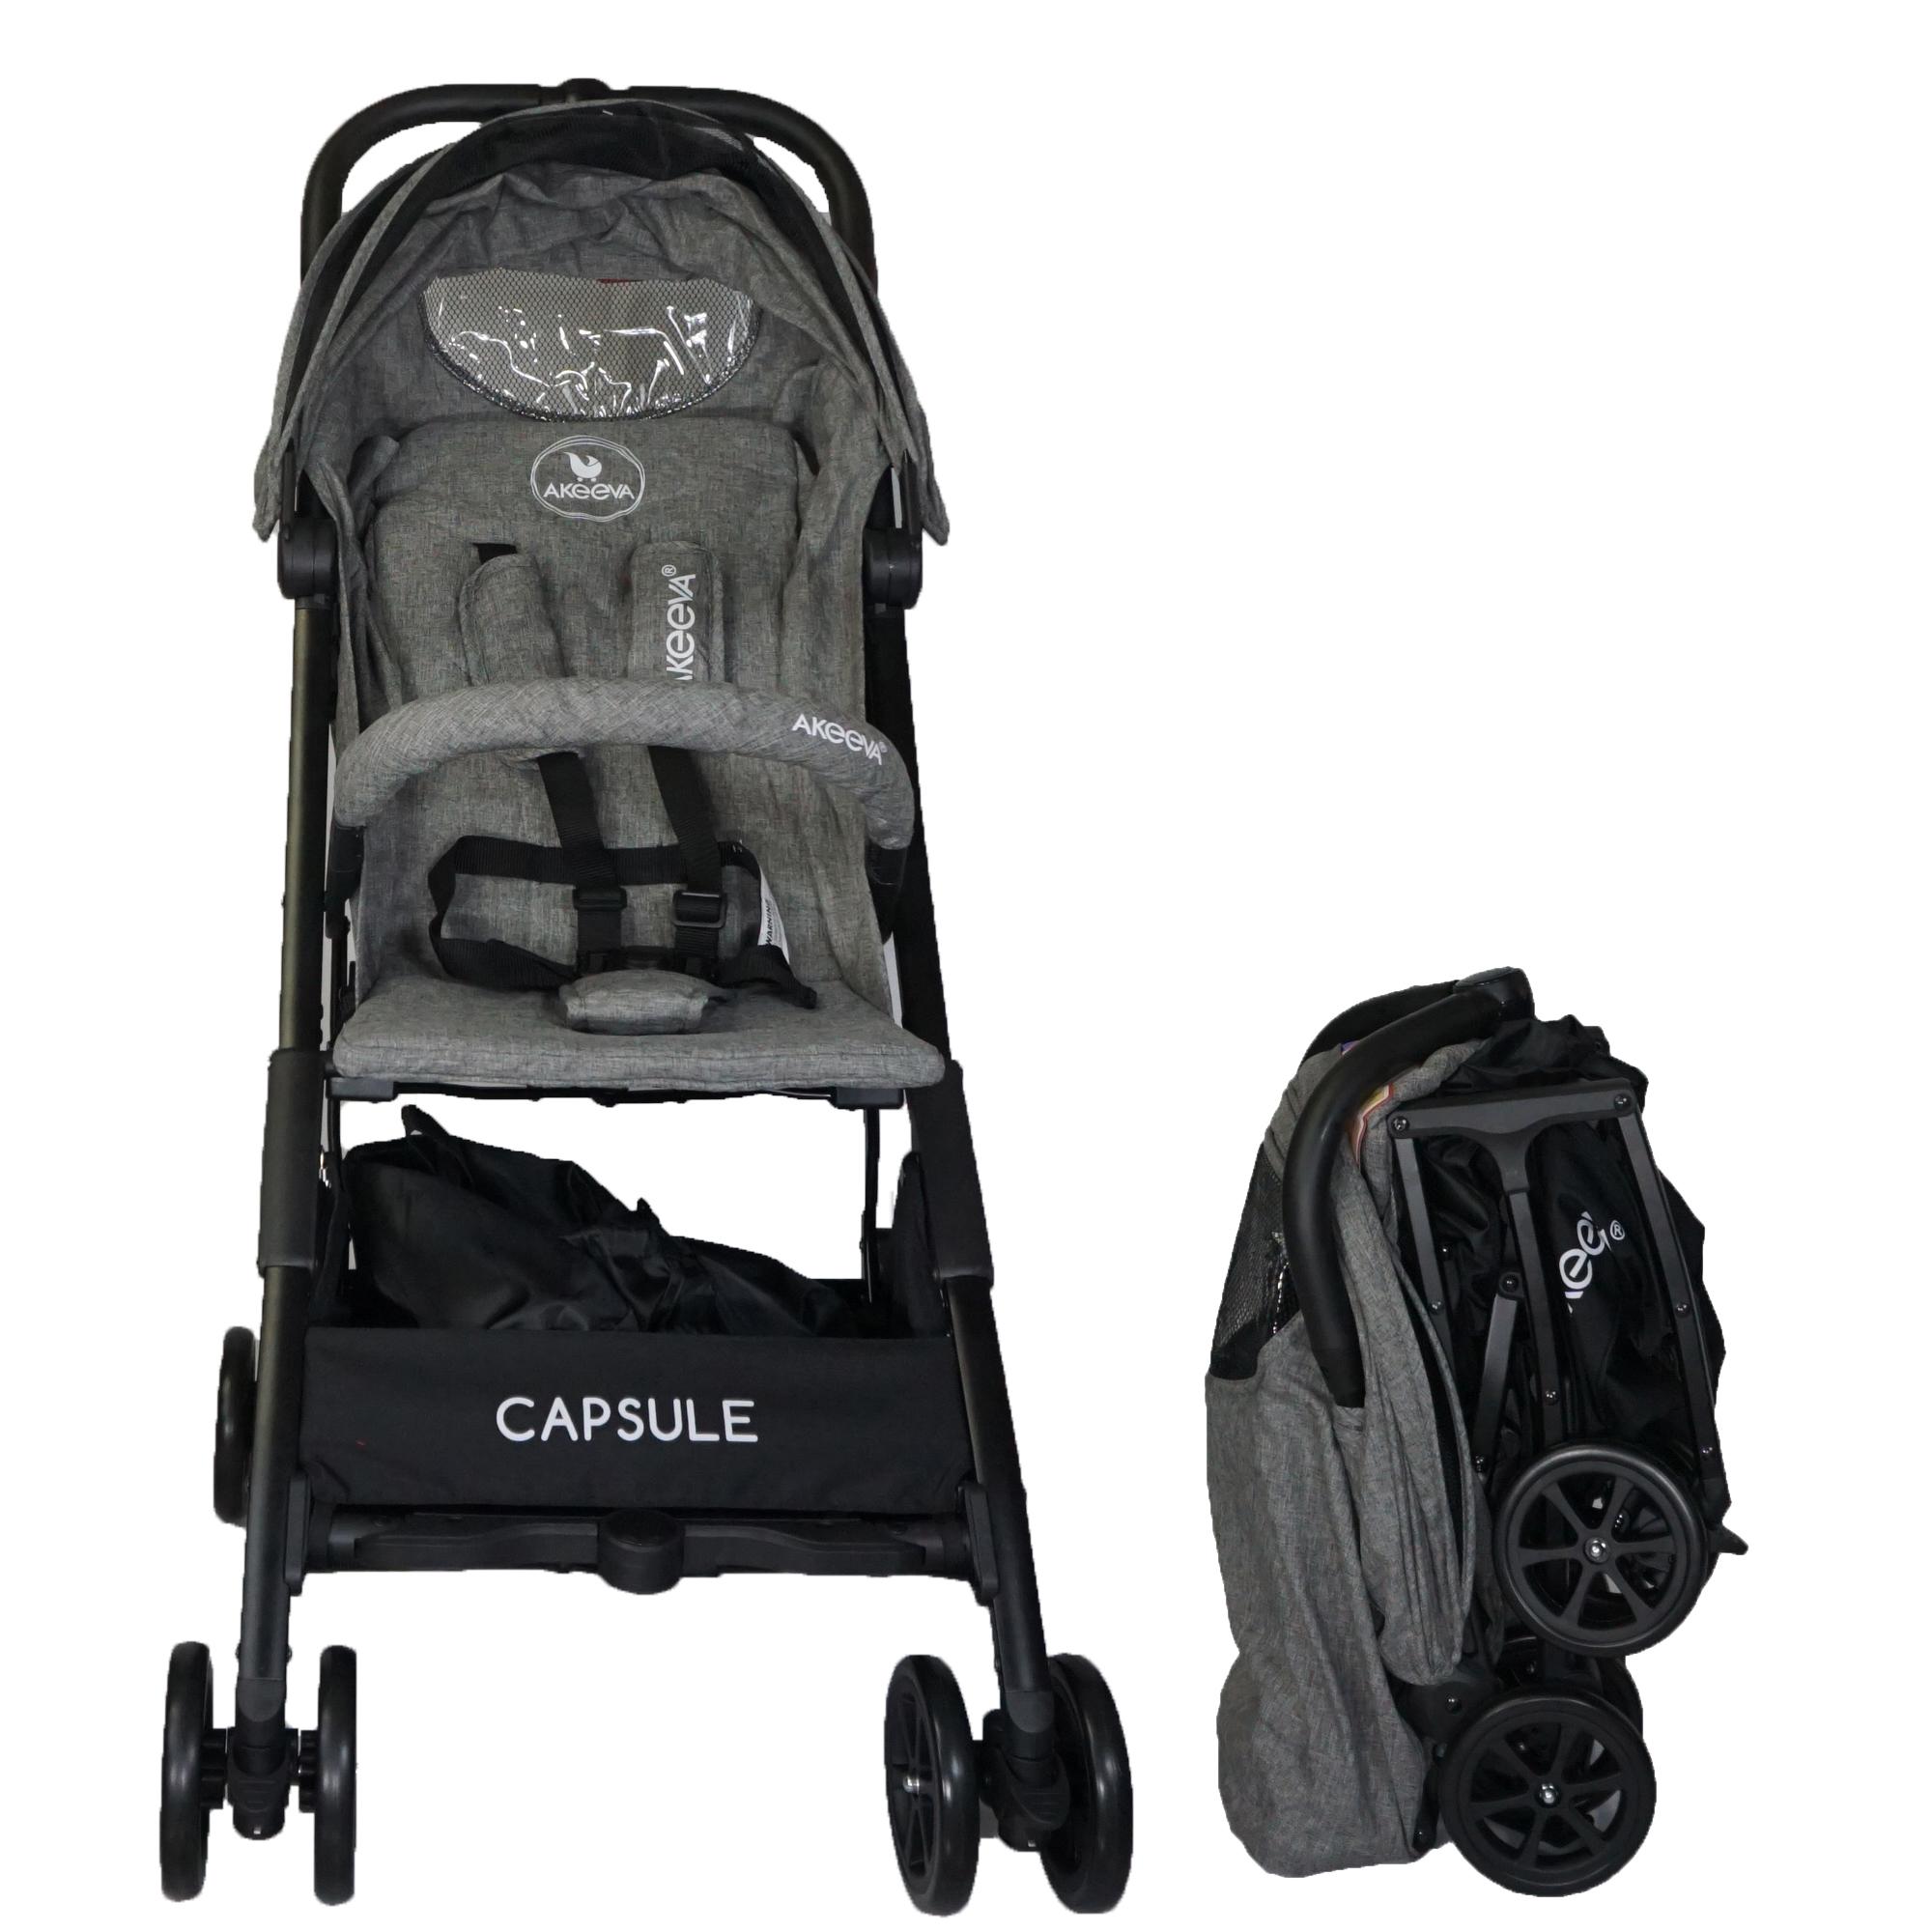 Akeeva Pocket Stroller (Capsule 